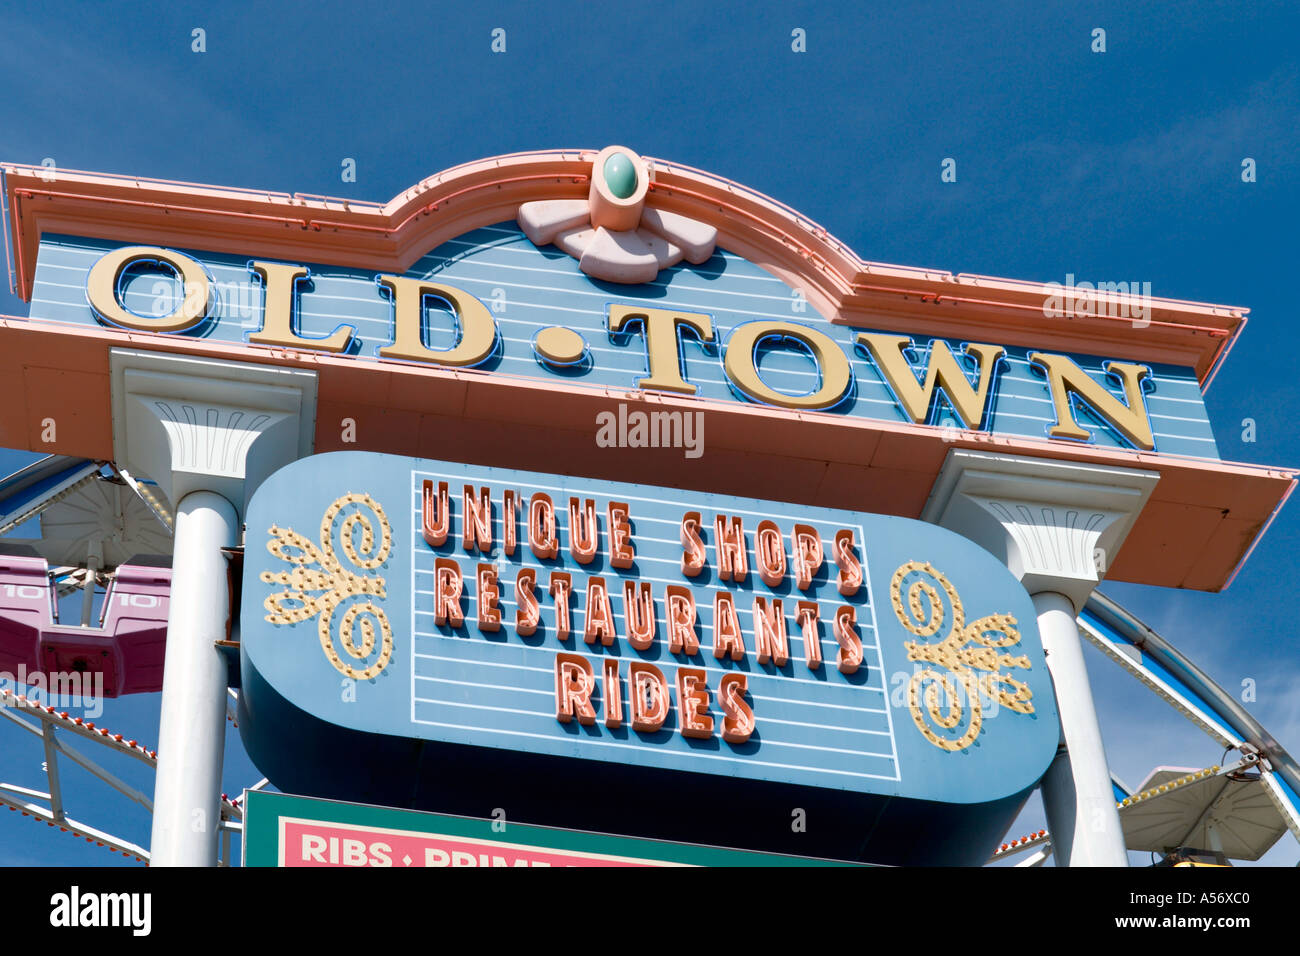 Ingresso segno, Old Town Kissimmee, Kissimmee, Orlando, Florida, Stati Uniti d'America Foto Stock